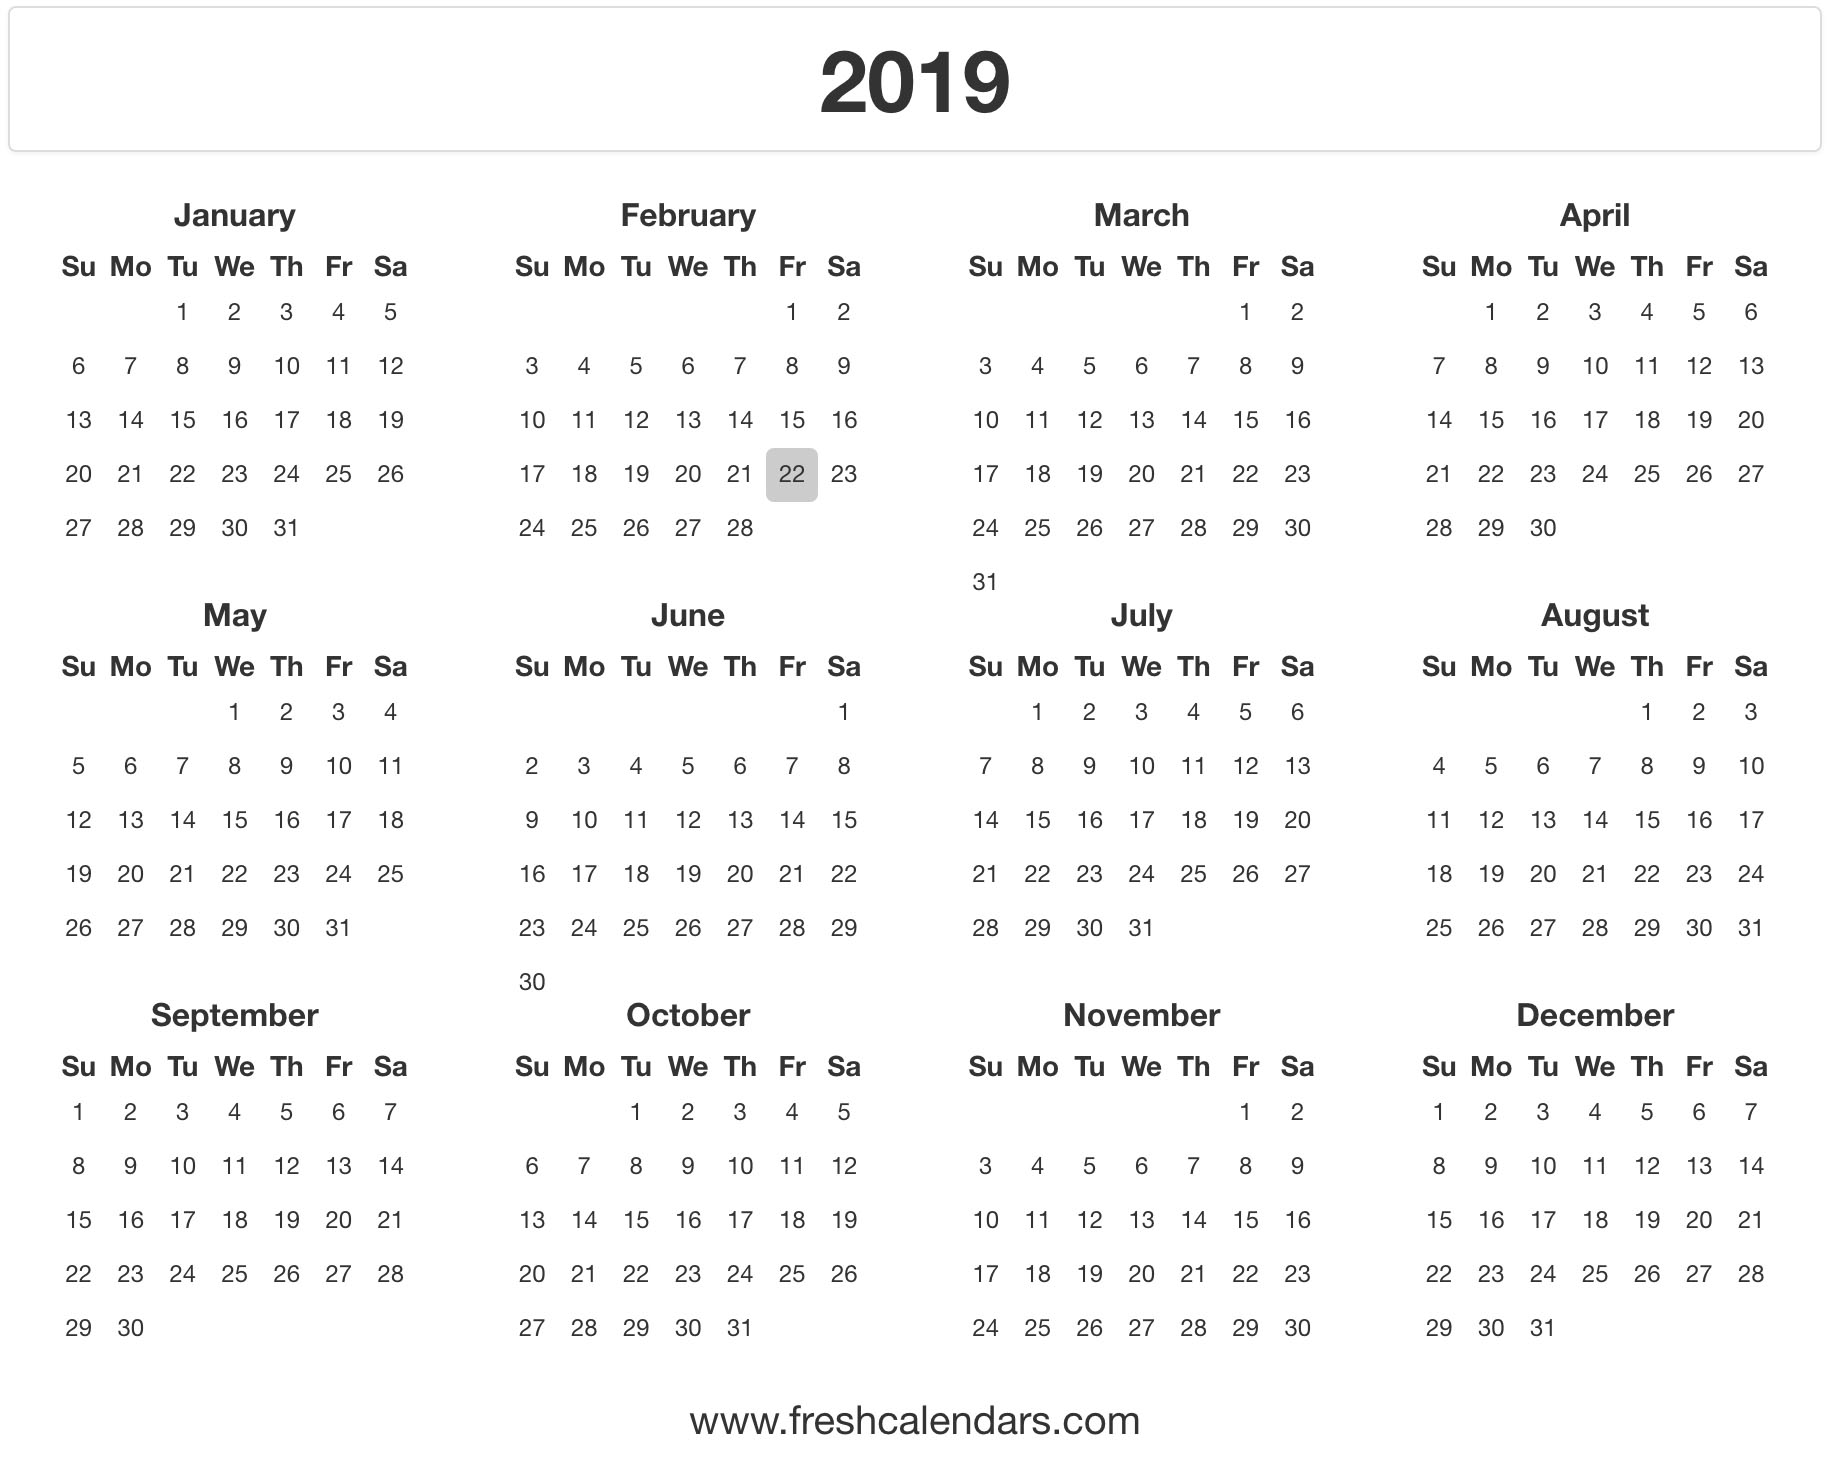 https://freshcalendars.com/calendar/yearly/2019/2019-Calendar-Printable.jpg